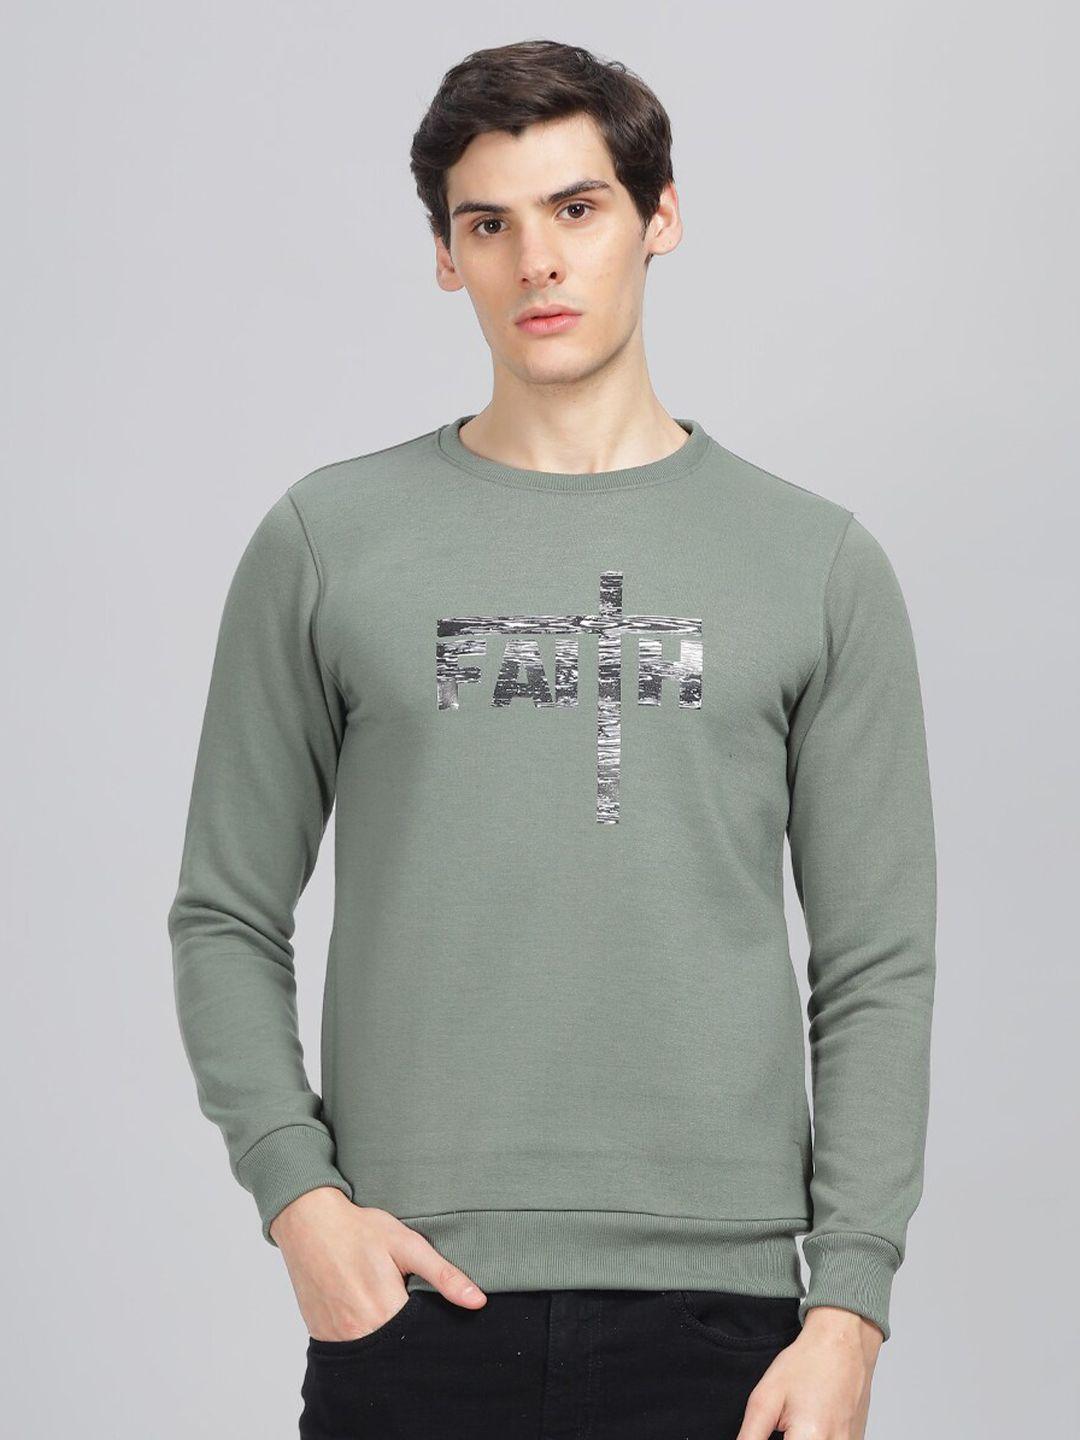 parcel-yard-faith-printed-round-neck-pullover-sweatshirt